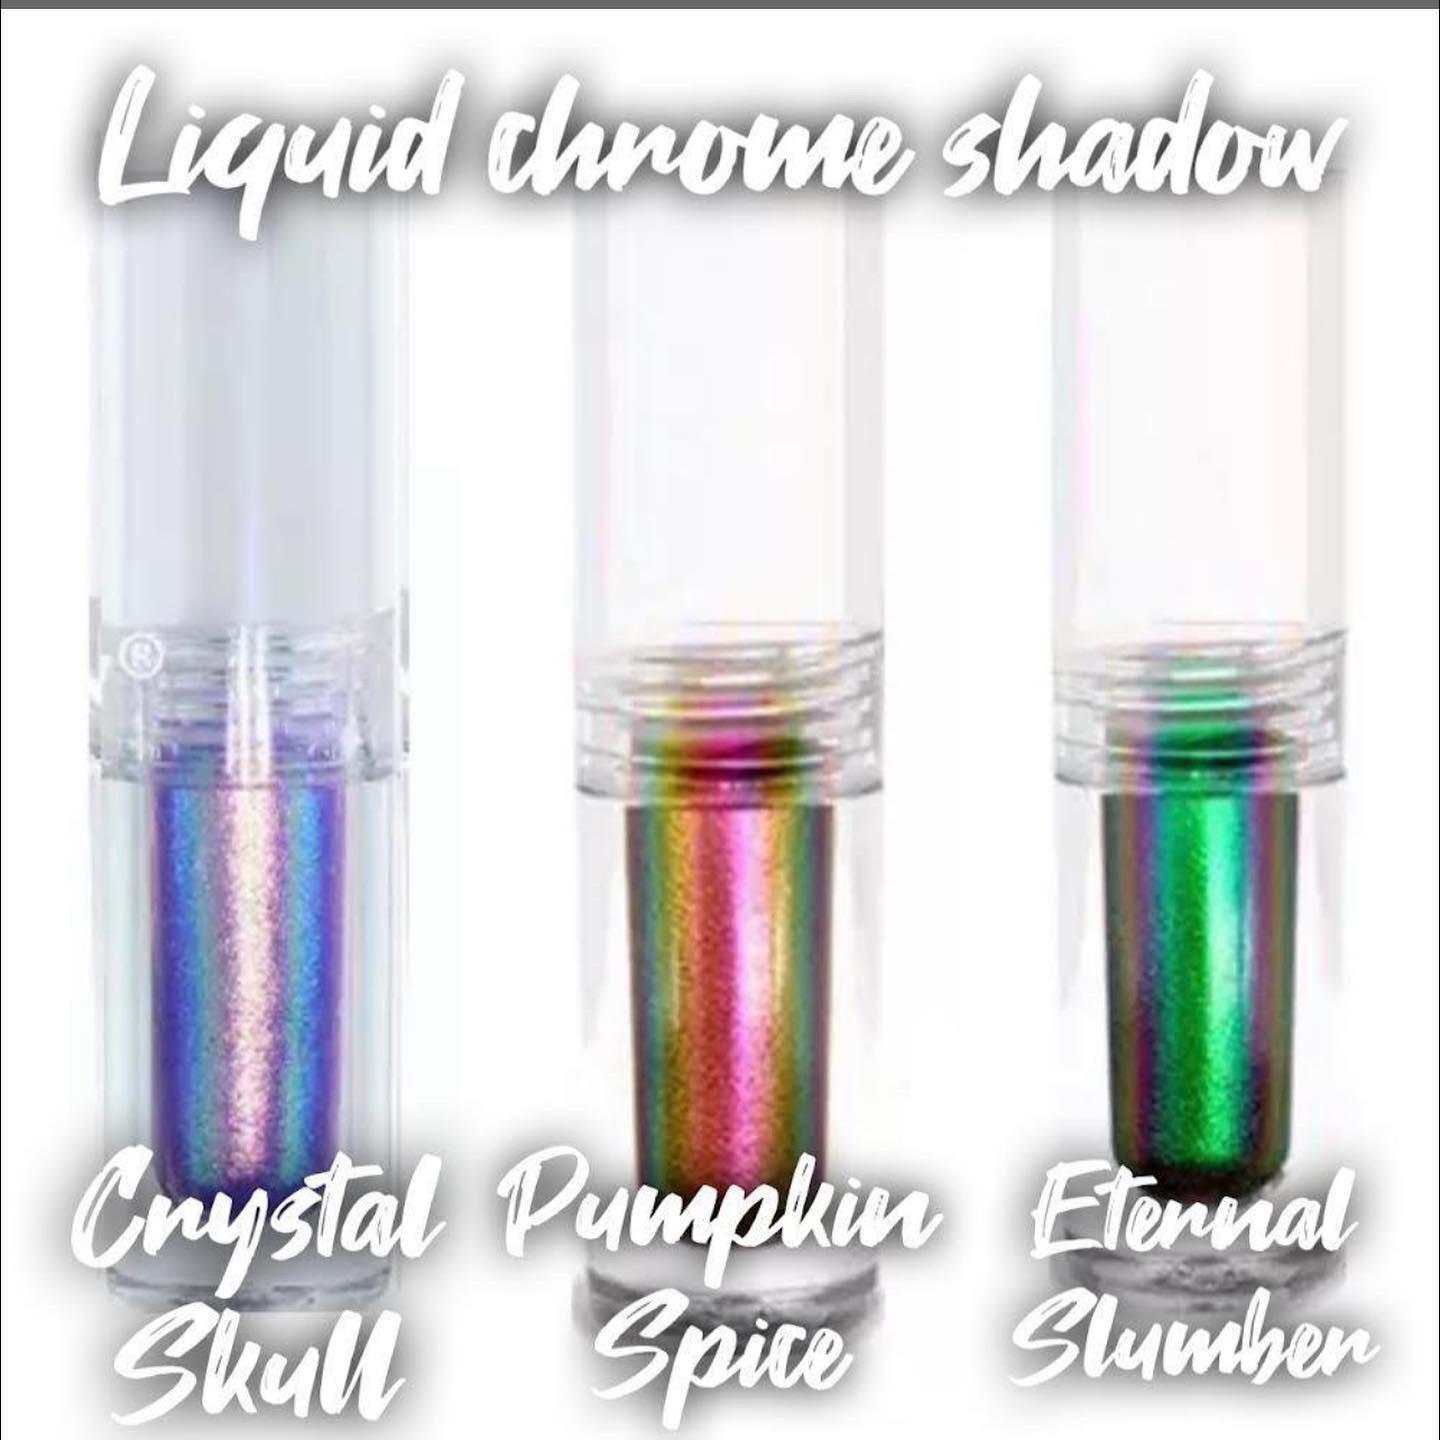 Liquid Chrome Shadow